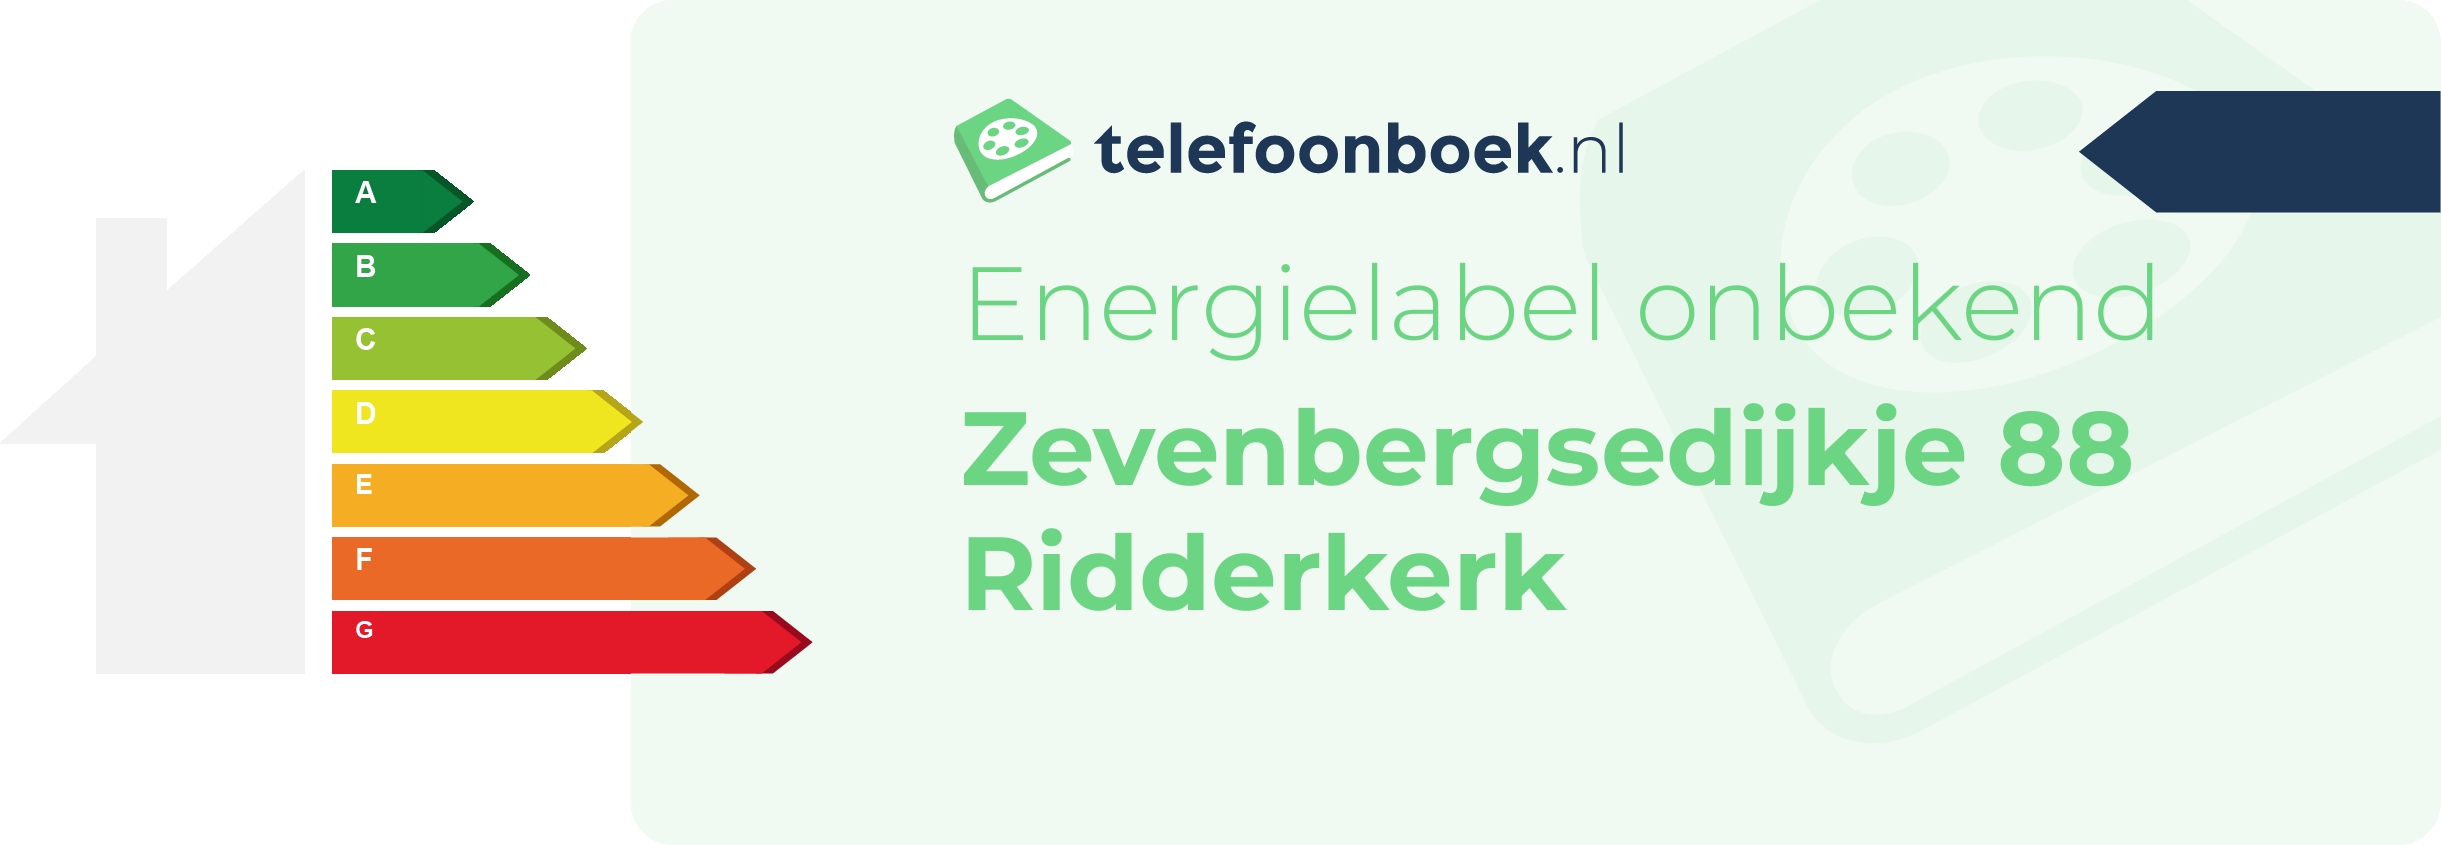 Energielabel Zevenbergsedijkje 88 Ridderkerk